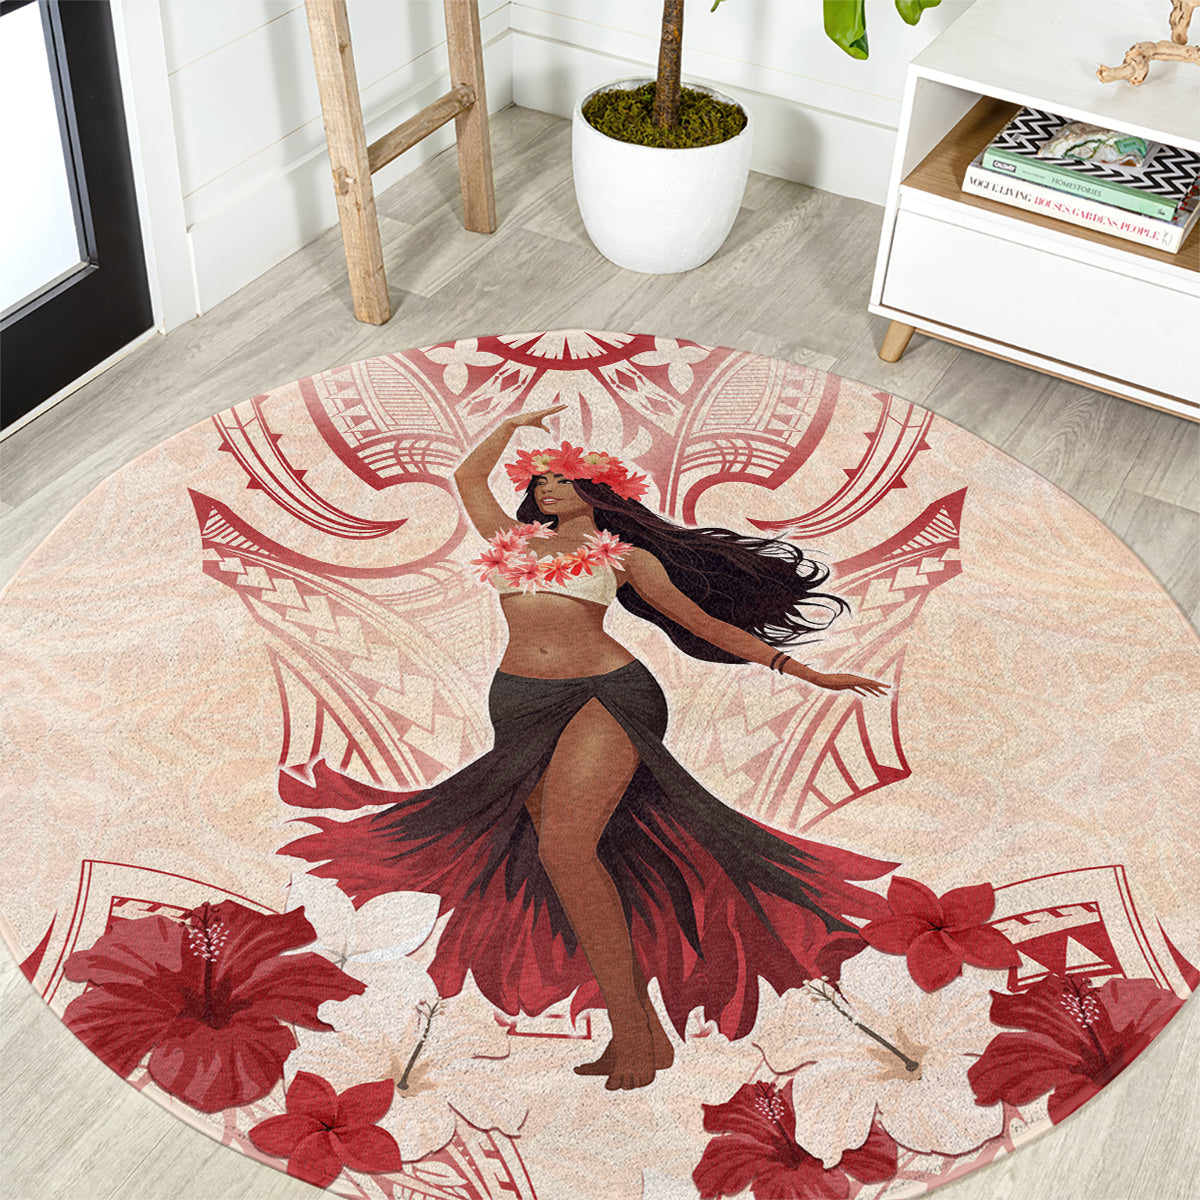 Tahiti Women's Day Round Carpet With Polynesian Pattern